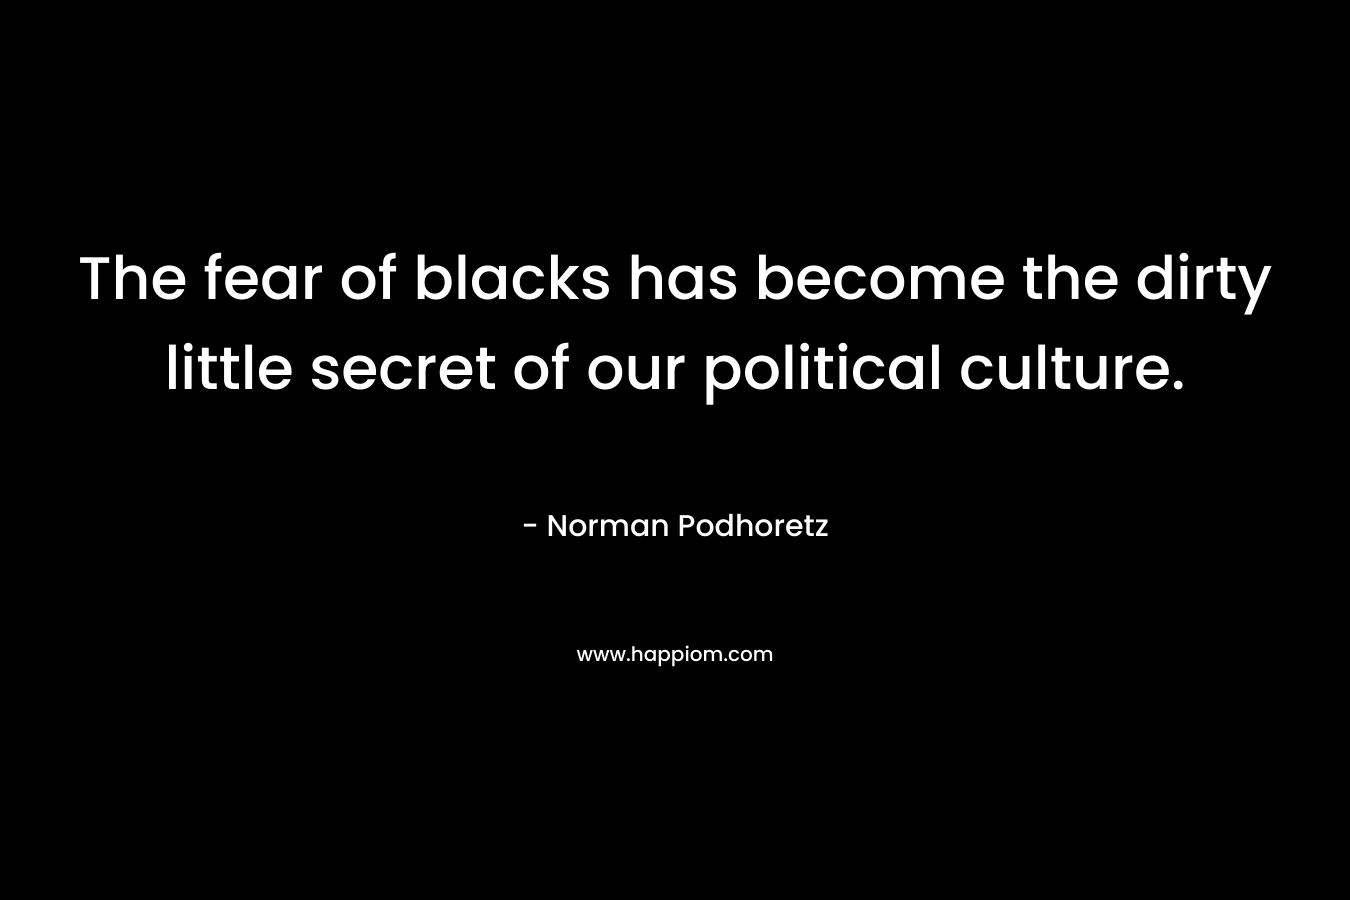 The fear of blacks has become the dirty little secret of our political culture. – Norman Podhoretz